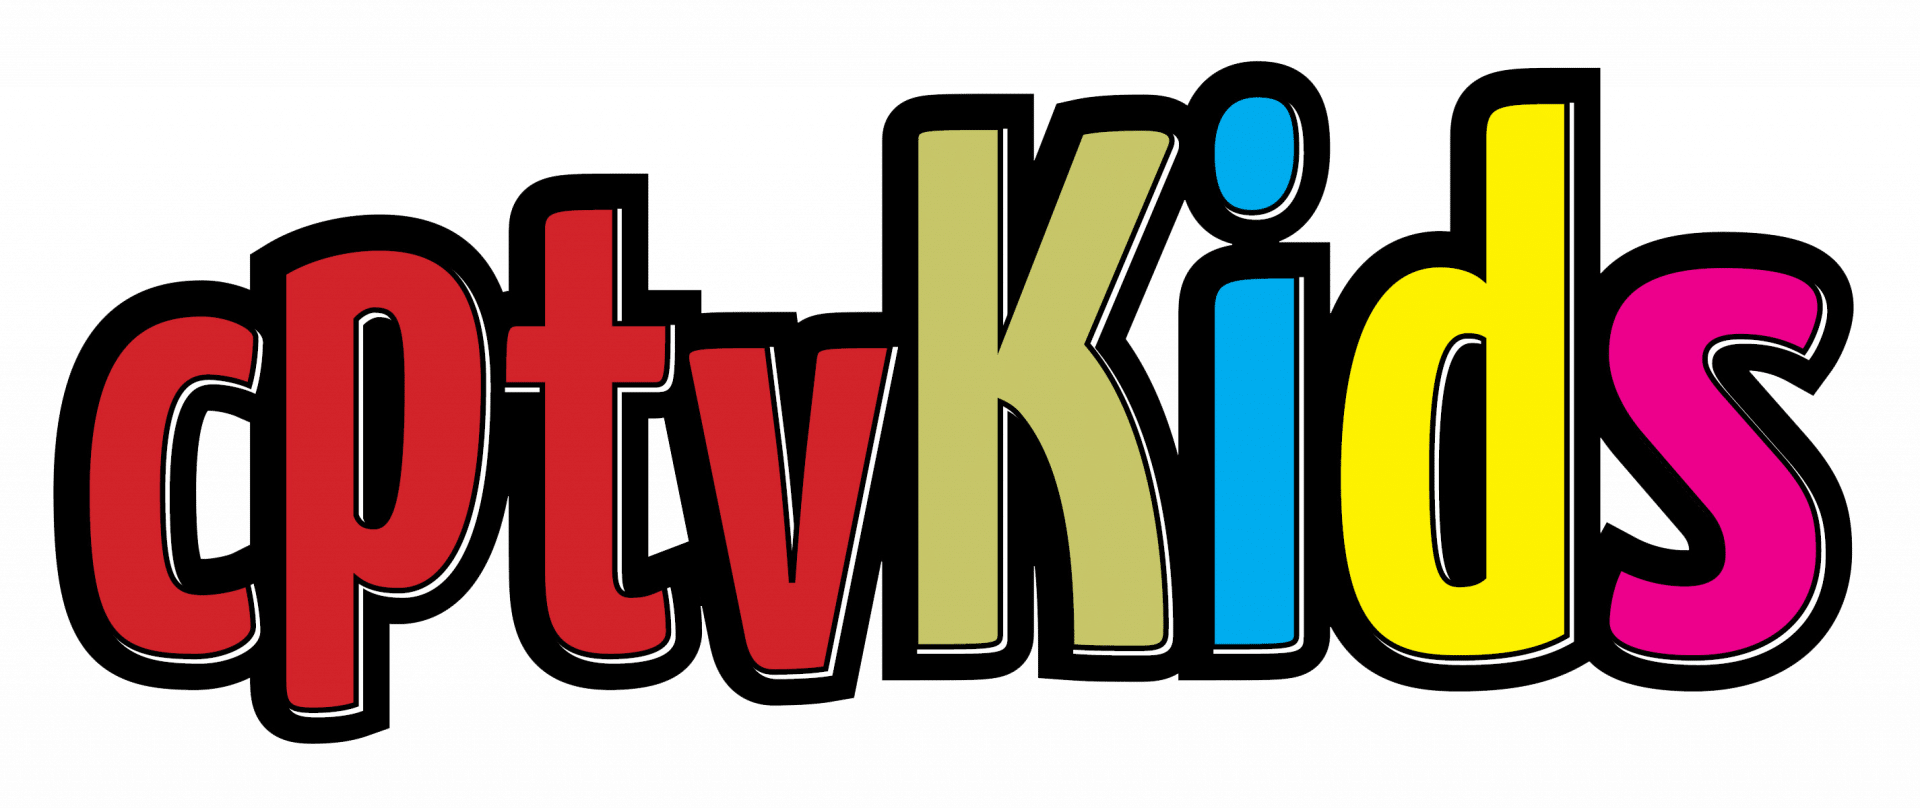 Public tv. MTV Kids logo.